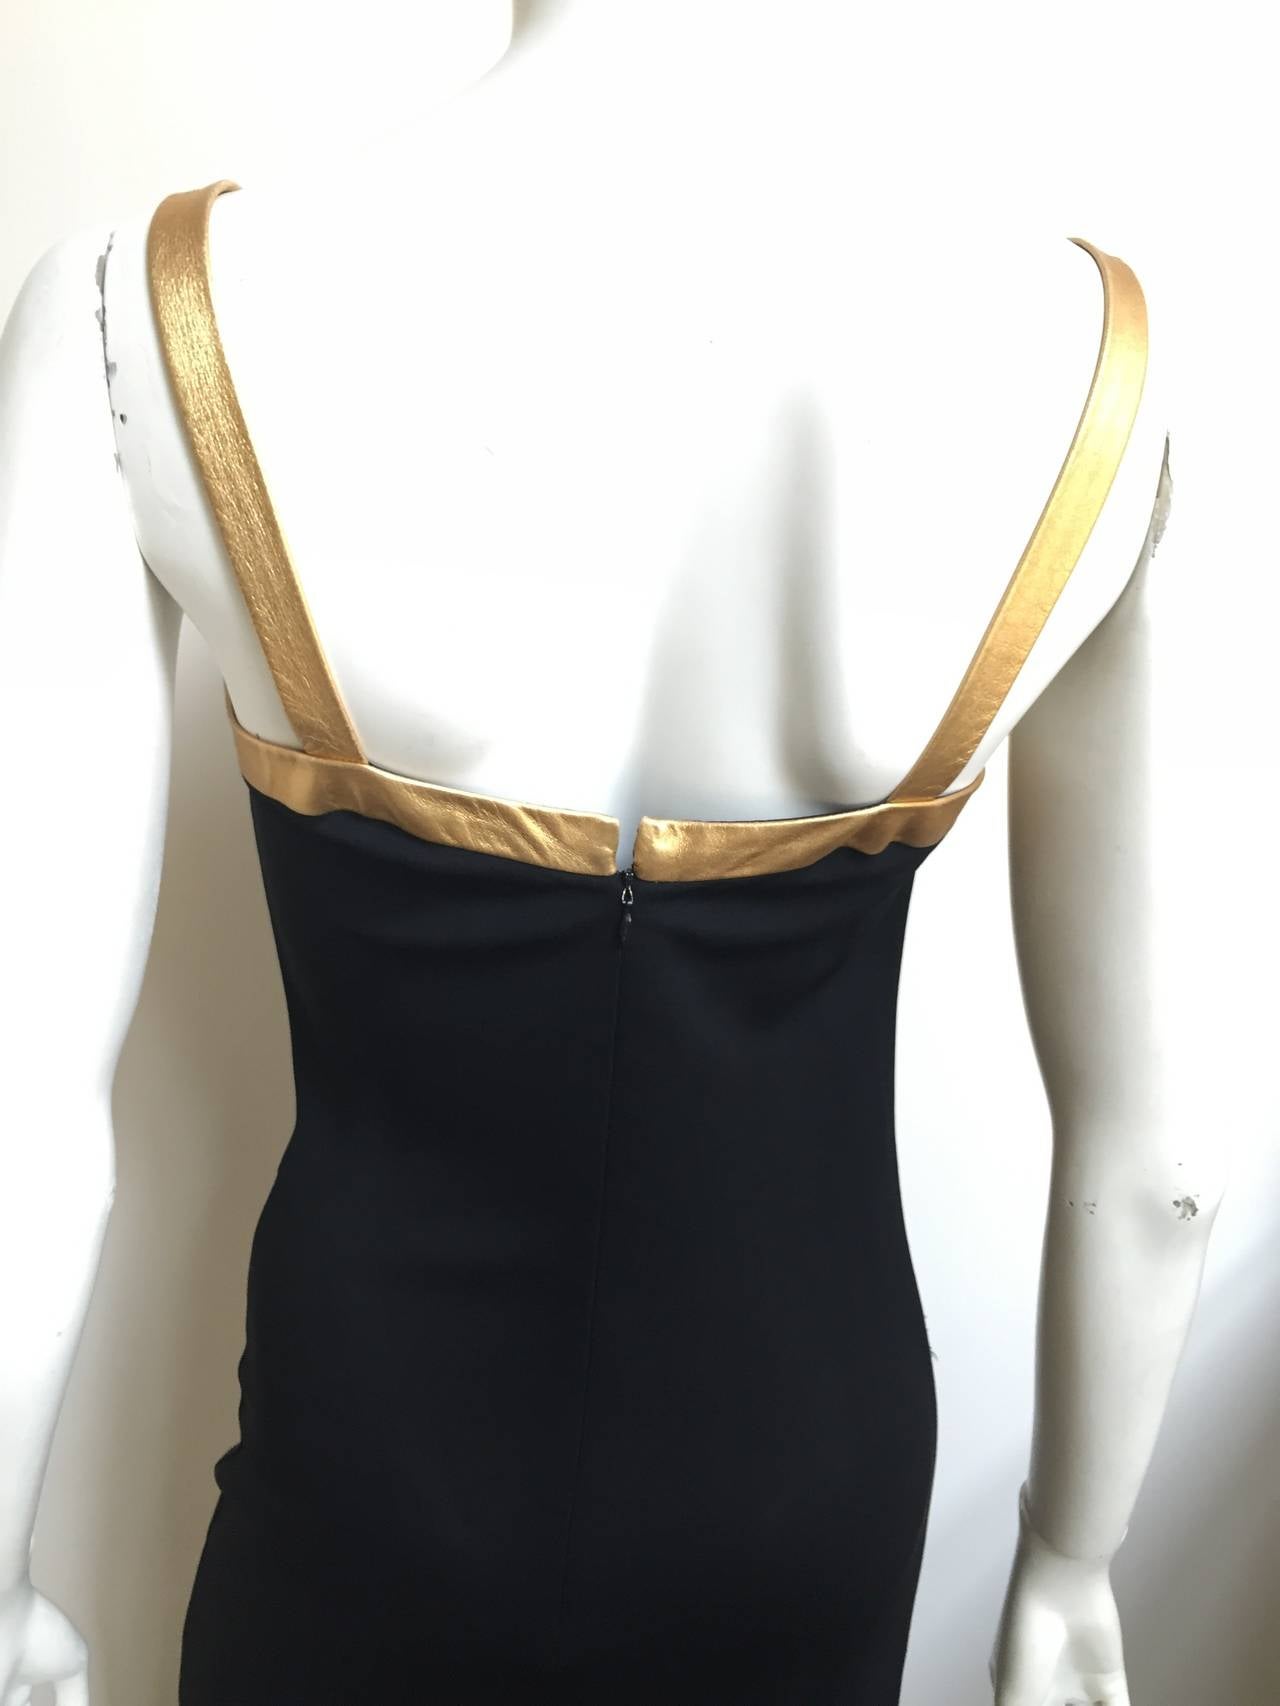 Ralph Lauren Black Gown Size 6. 2